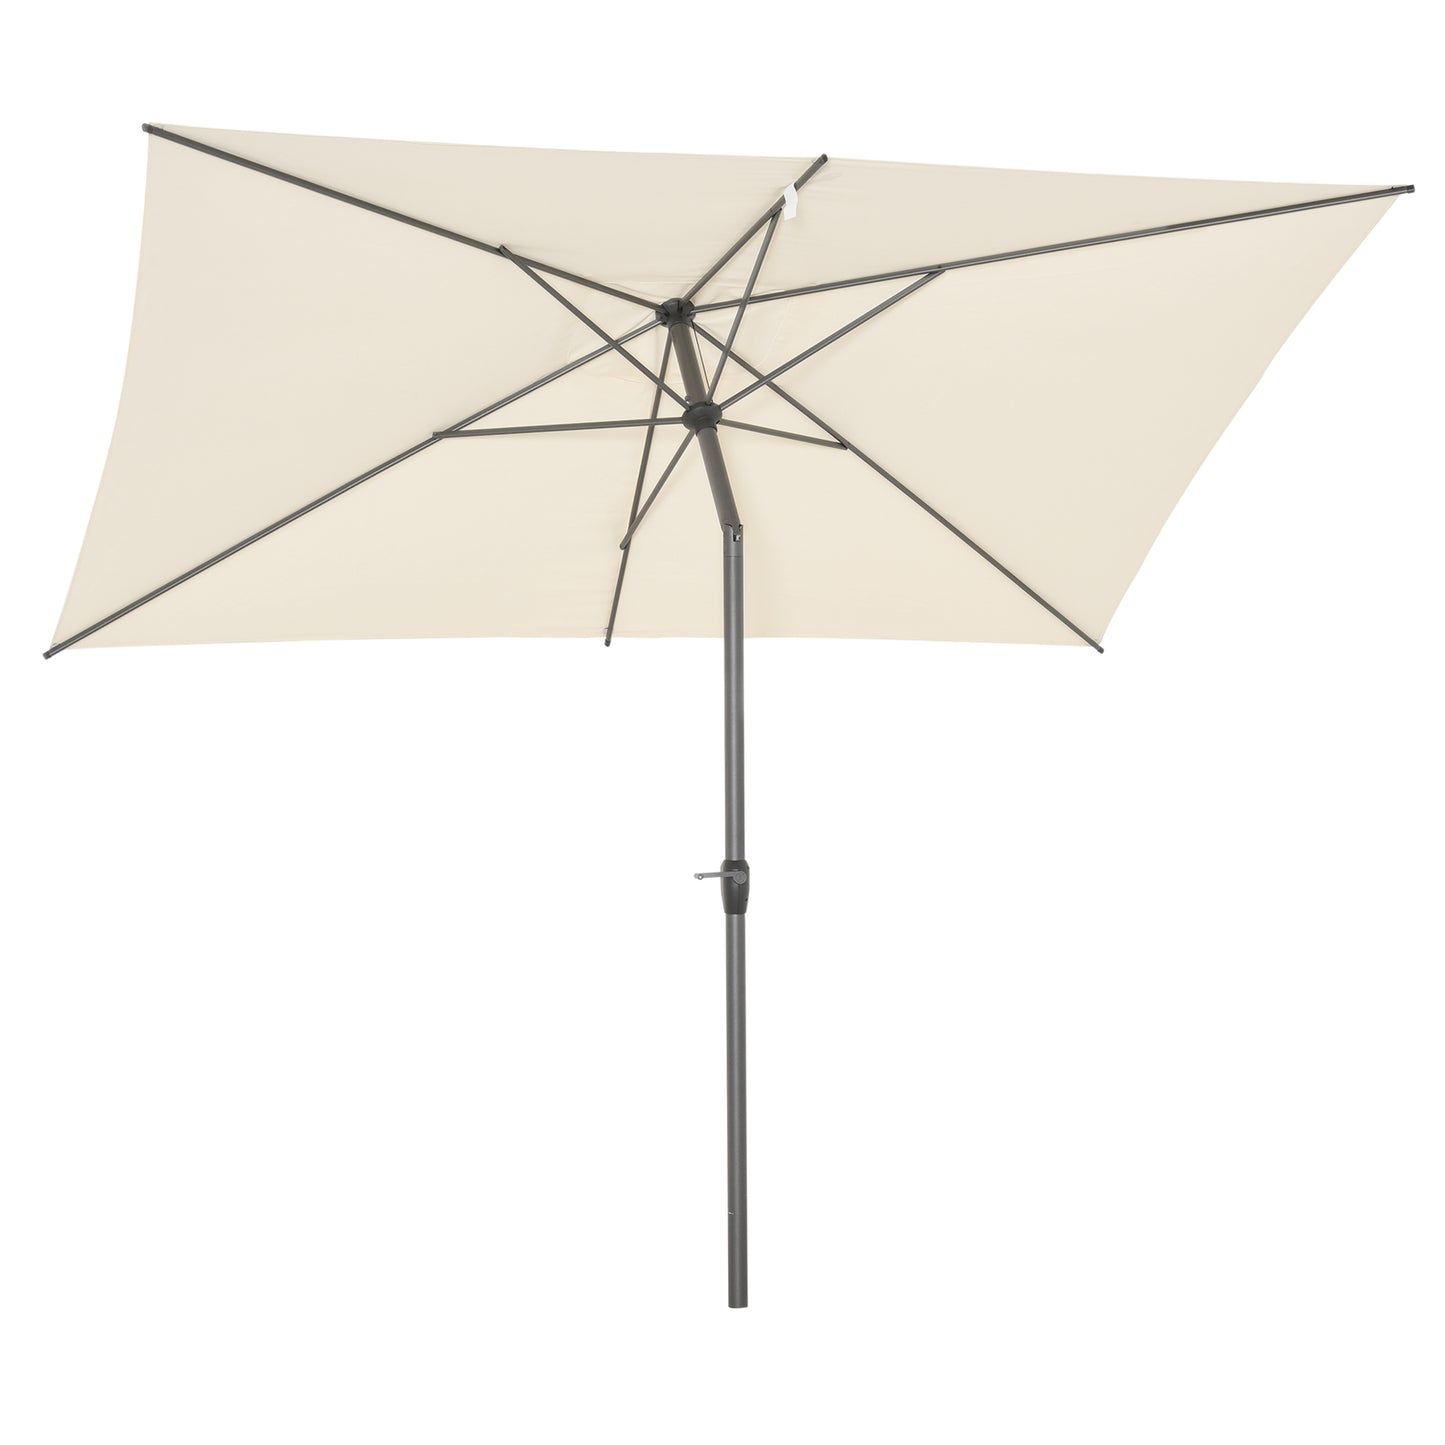 Outsunny Garden Sun Umbrella Patio Parasol w/ Tilt Crank Adjustable Angle 3 x 2m Beige